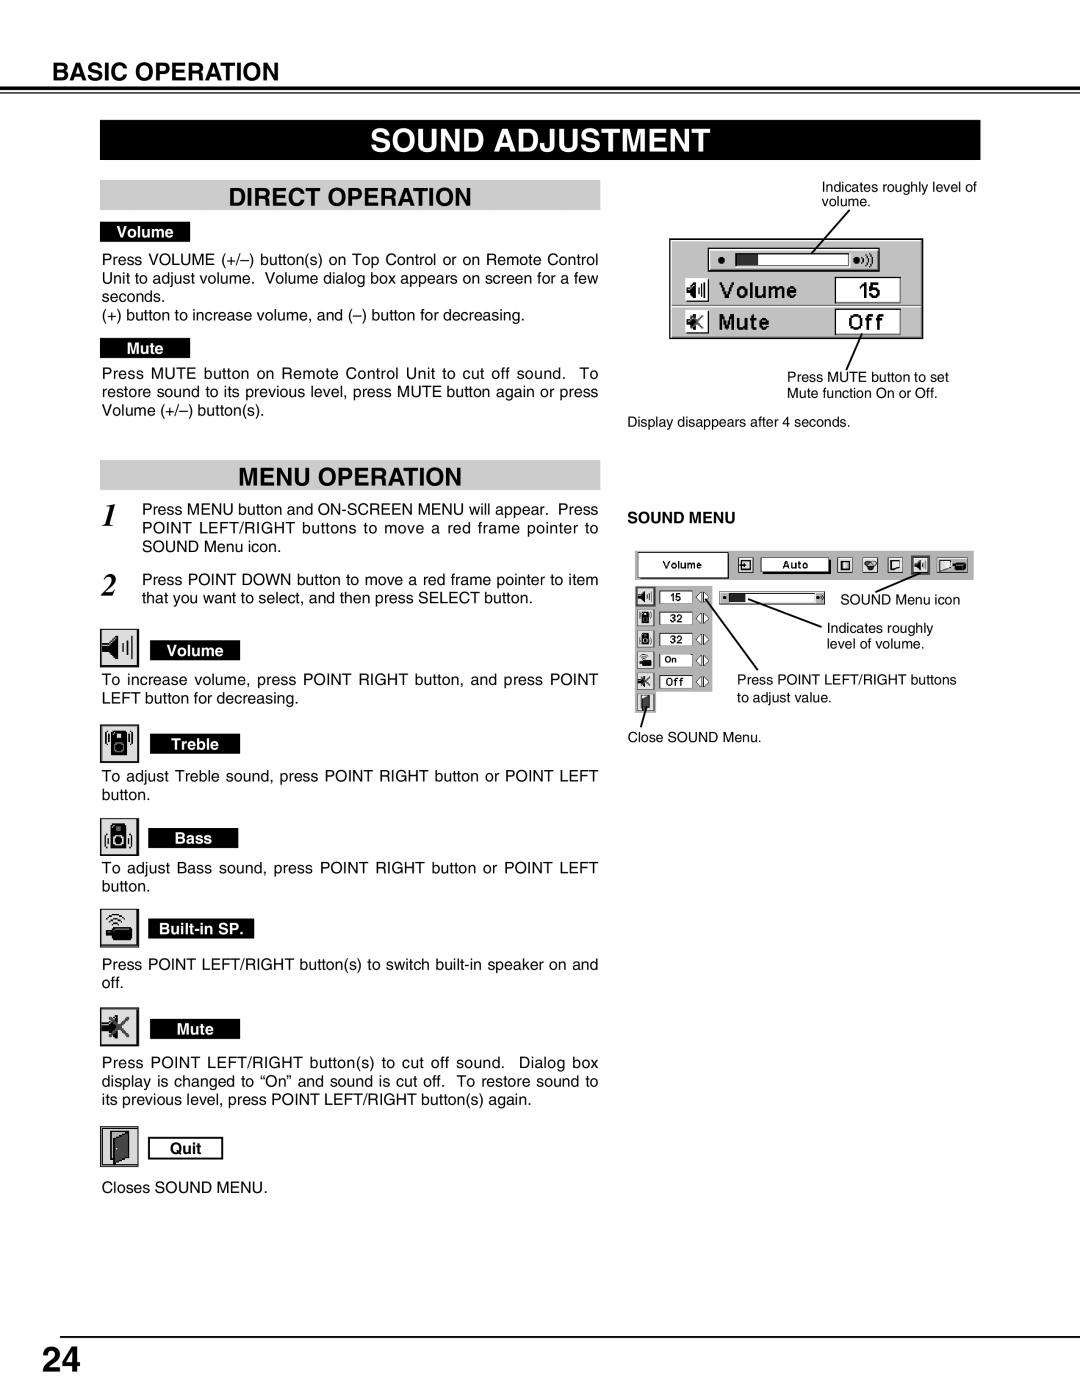 Christie Digital Systems 38-VIV302-01 user manual Sound Adjustment, Direct Operation, Menu Operation, Basic Operation, Quit 